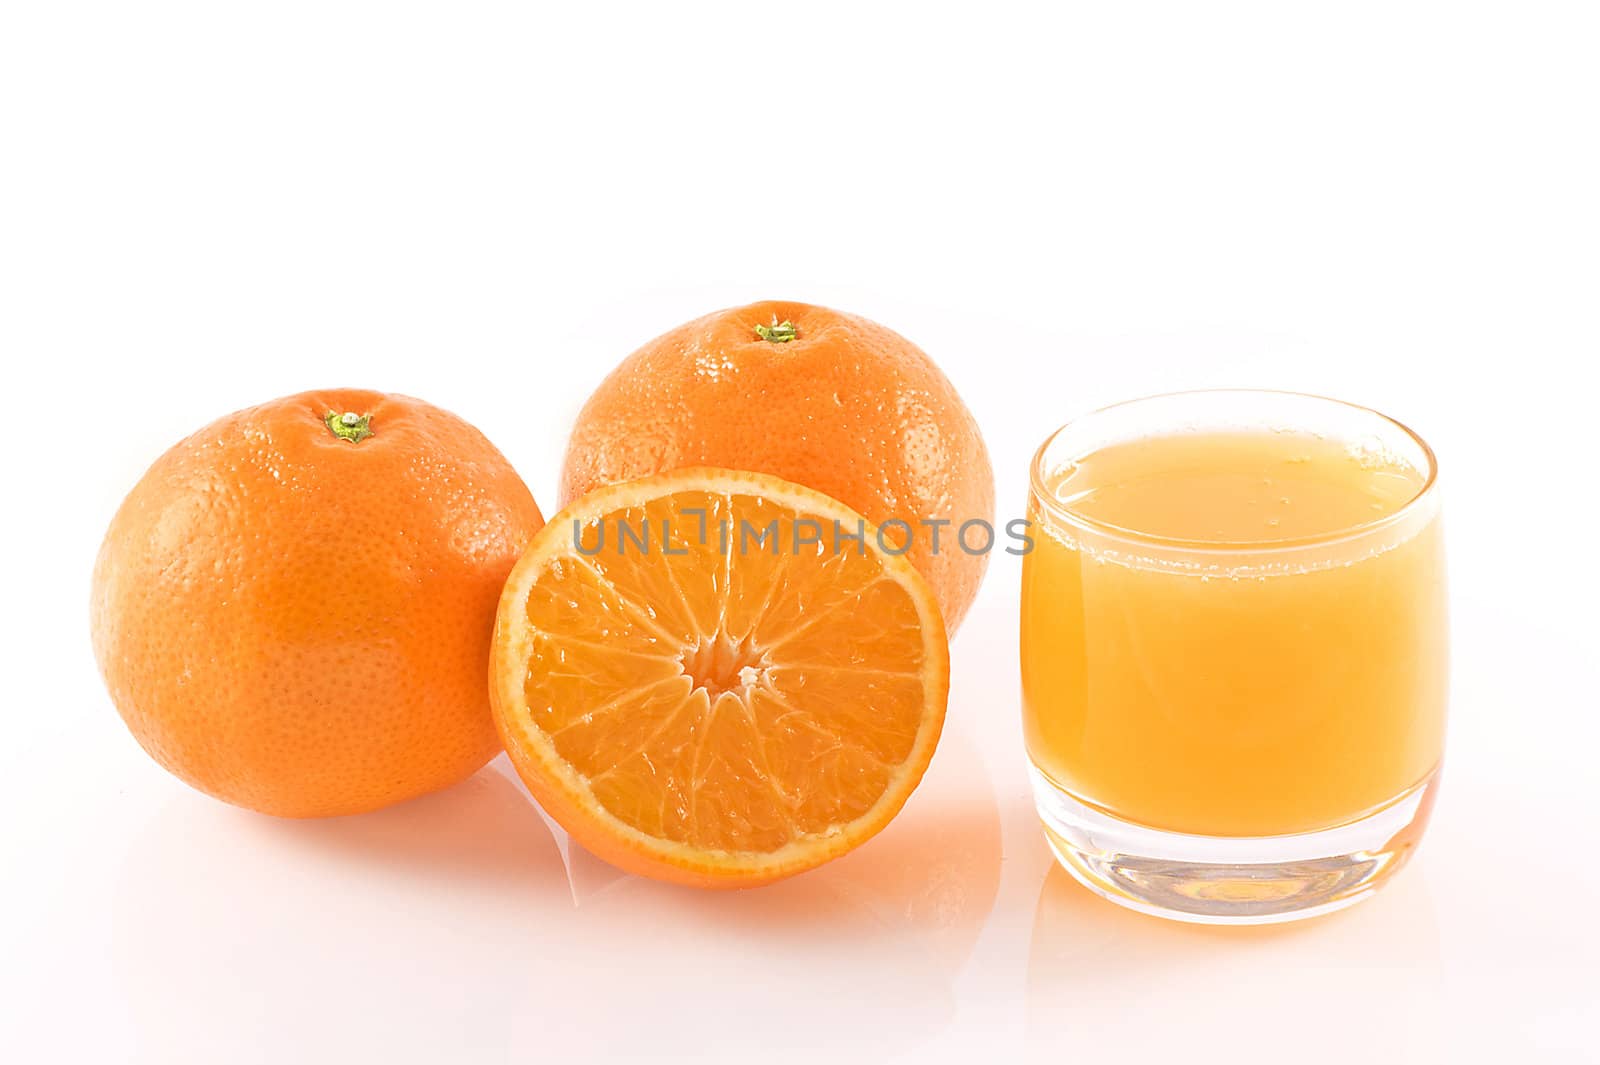 Oranges and a glass of fresh orange juice, isolated on white.